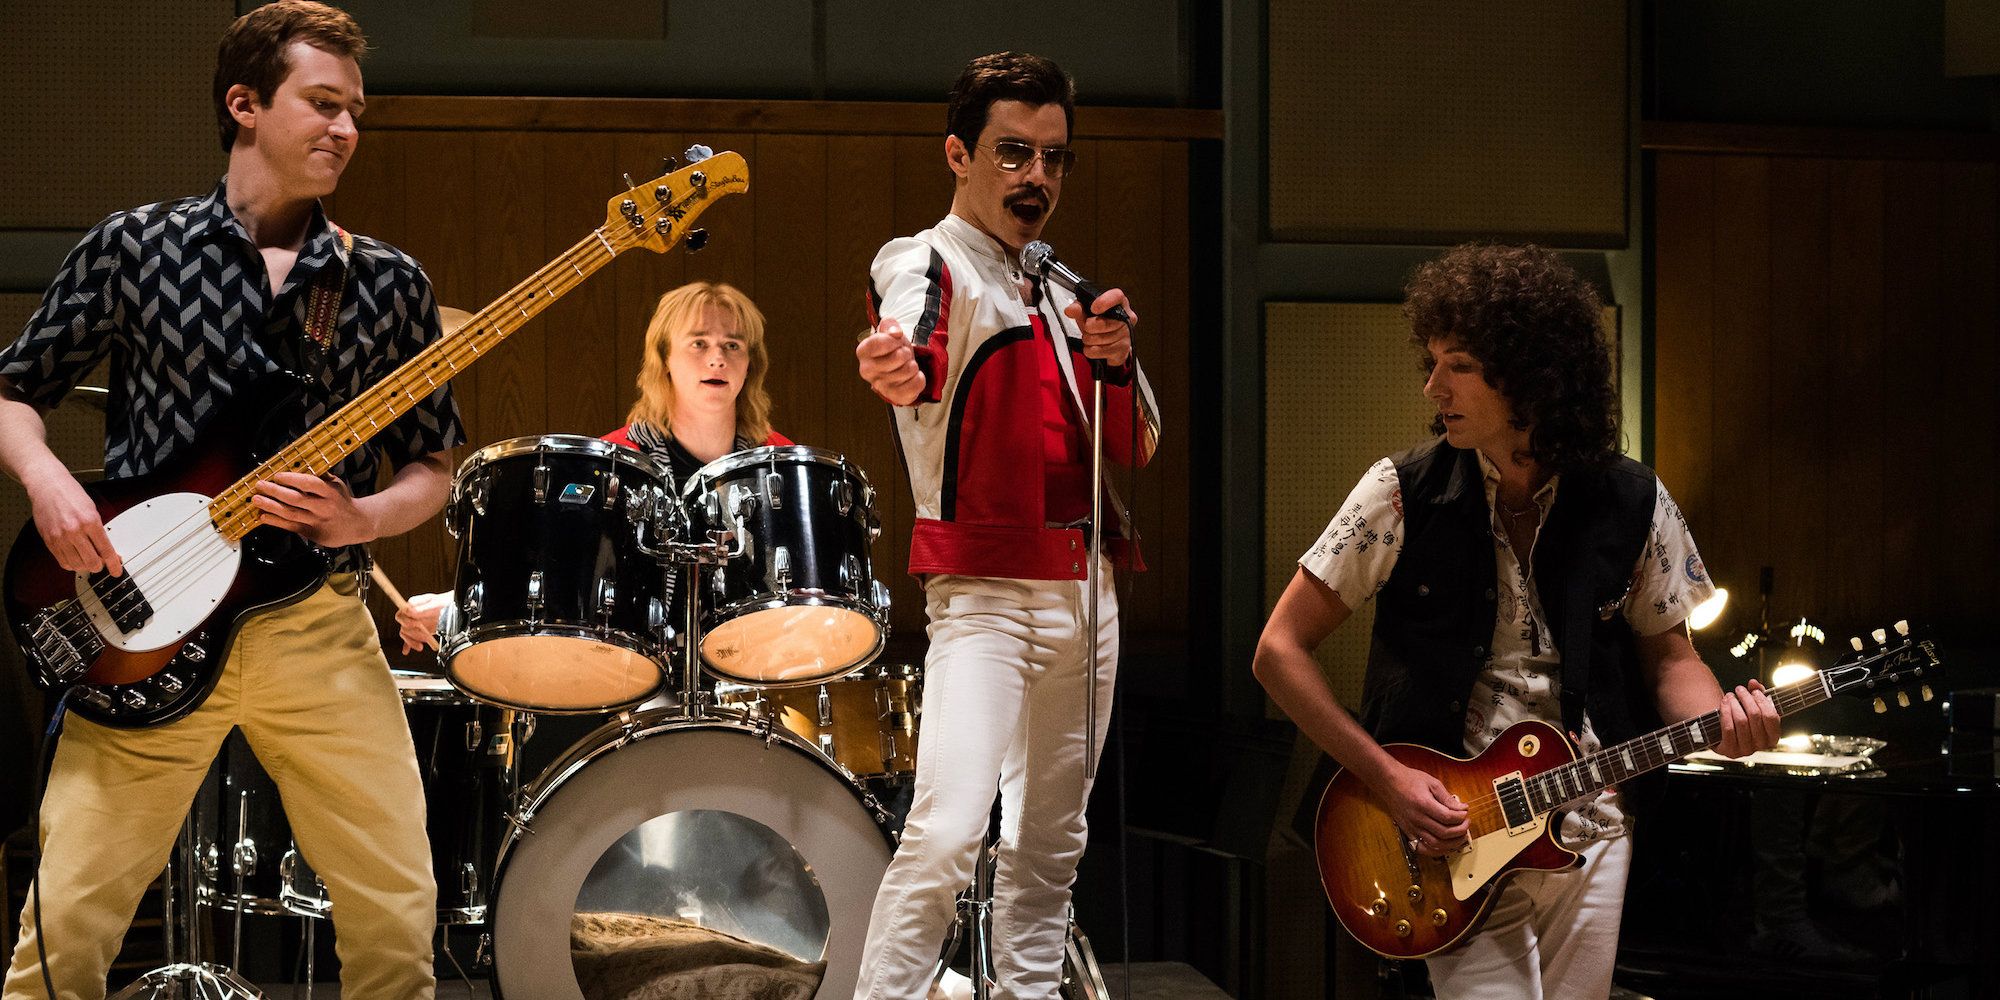 Queen performing in a rehearsal space in Bohemian Rhapsody